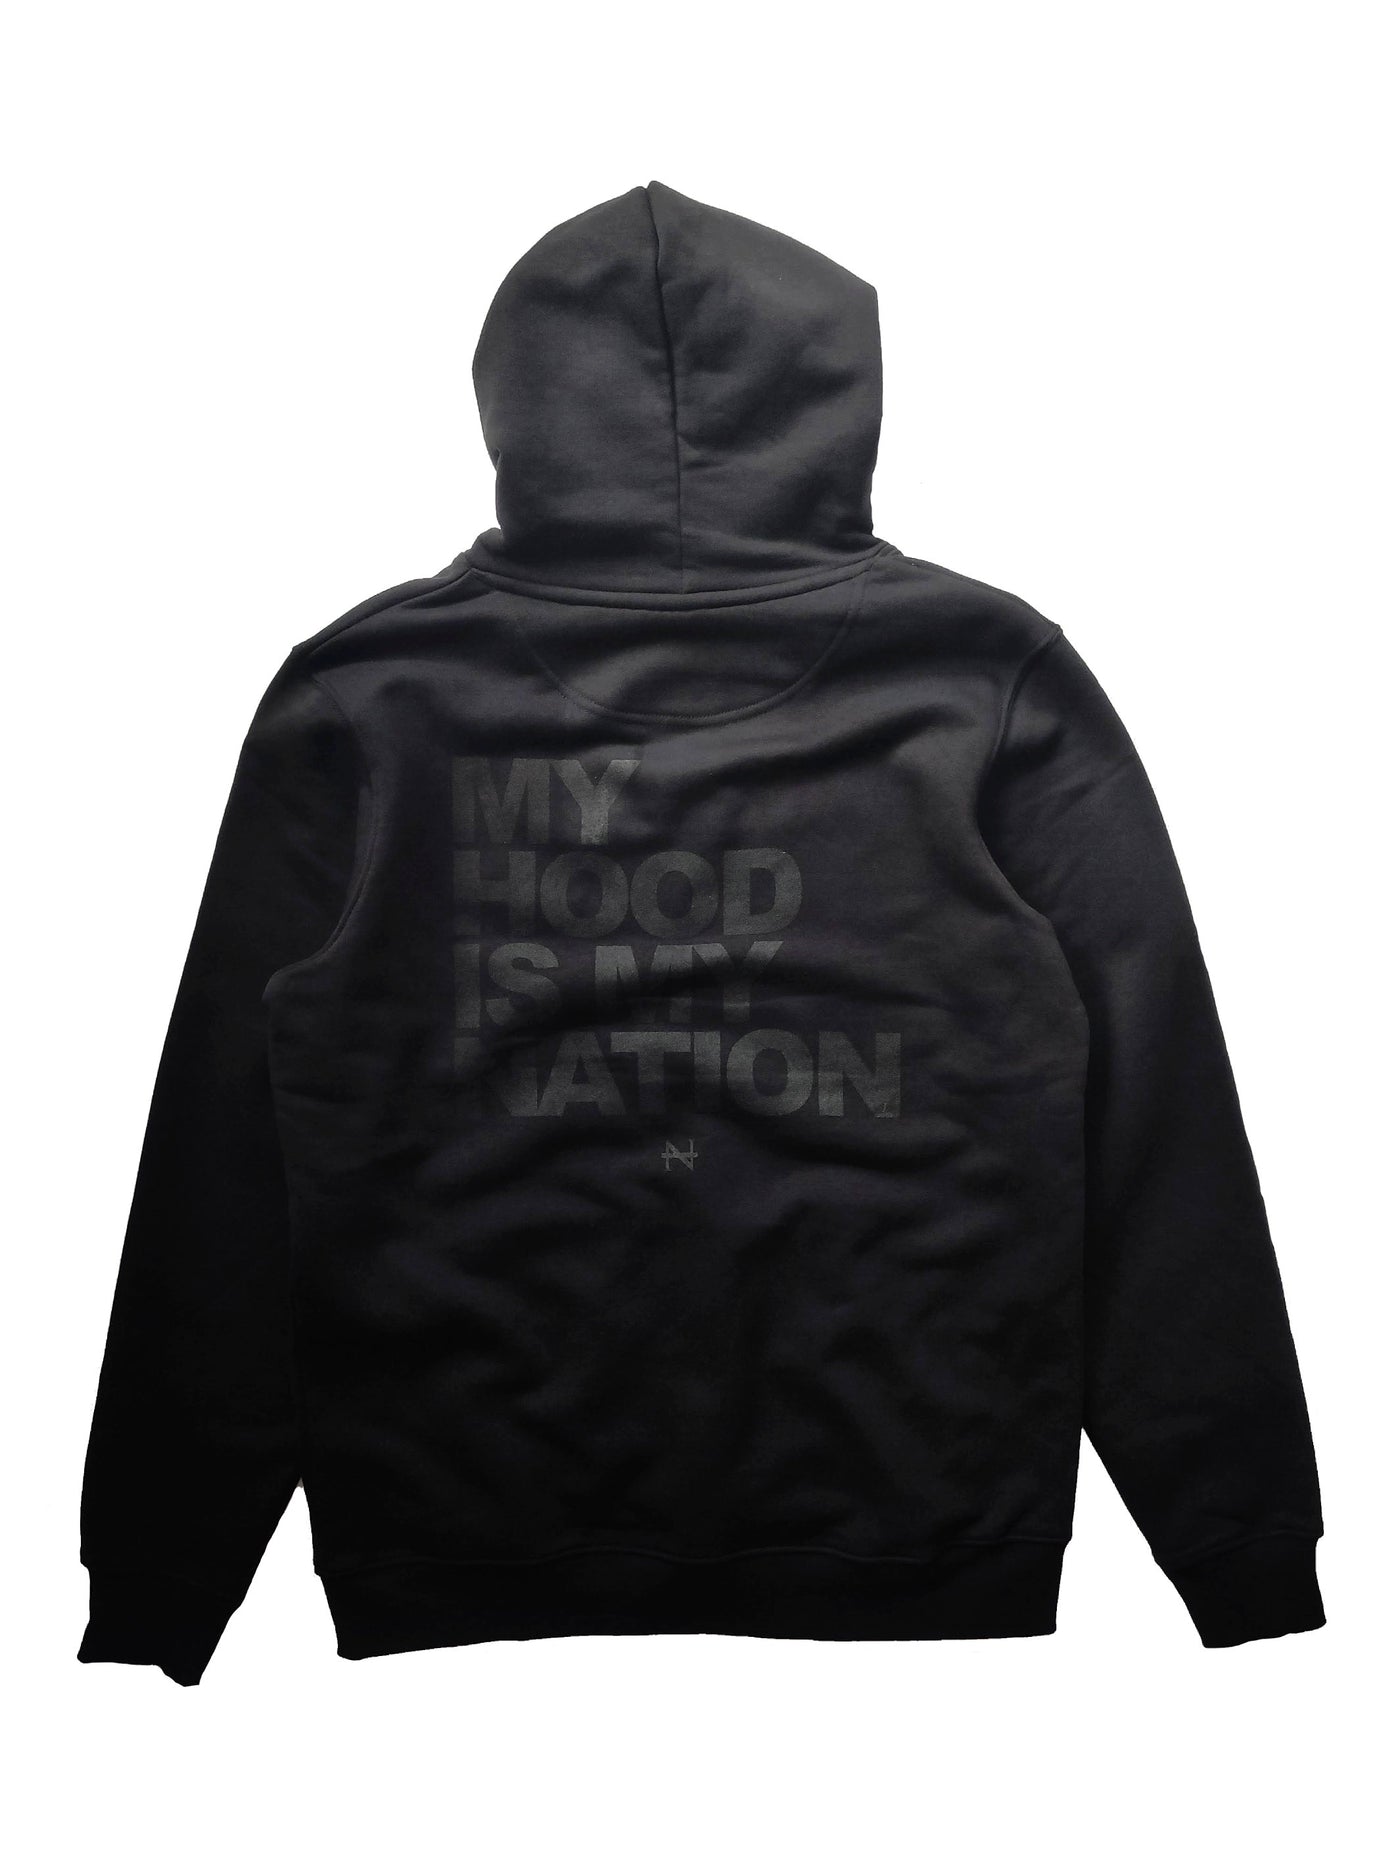 "My Hood" Hooded Sweatshirt black (heavyweight 350gsm)